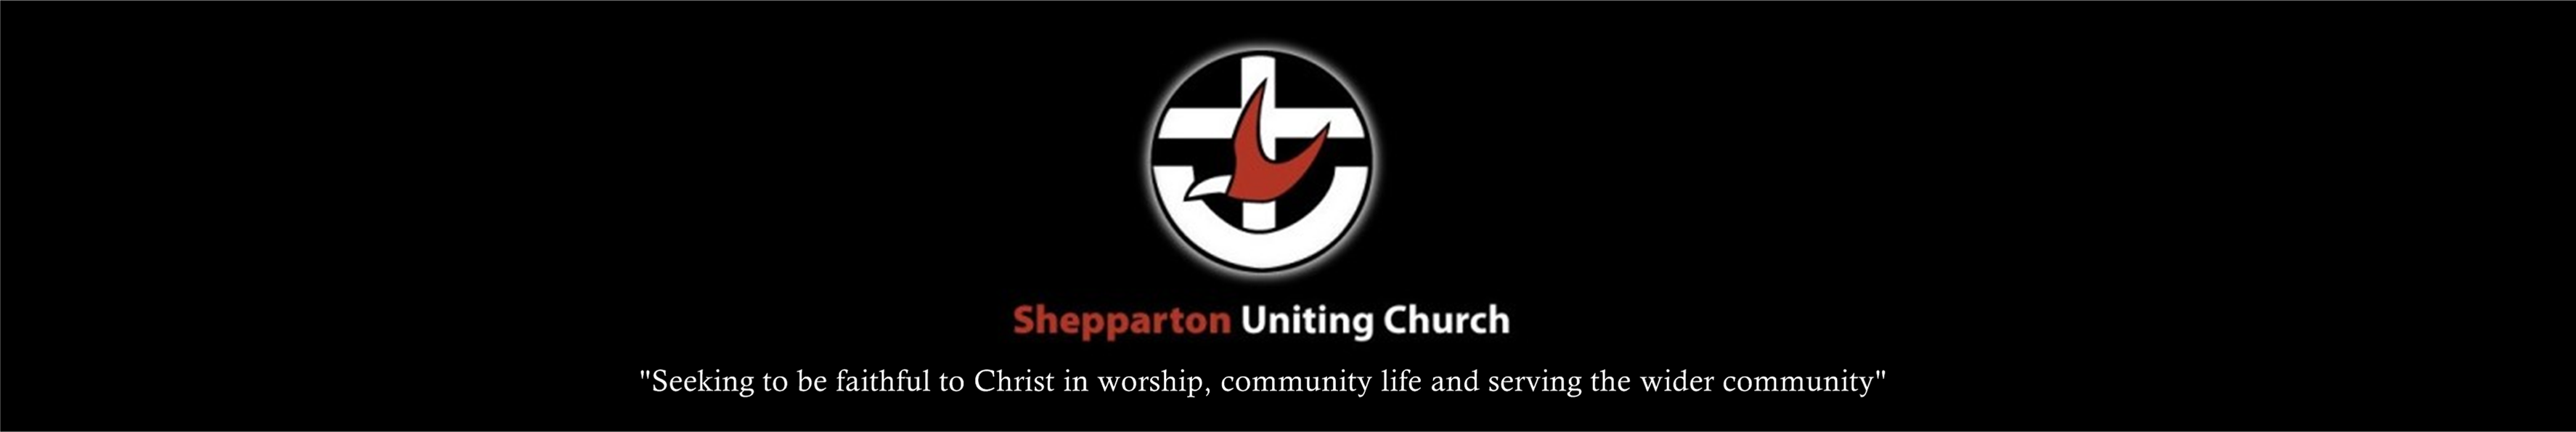 Shepparton Uniting Church